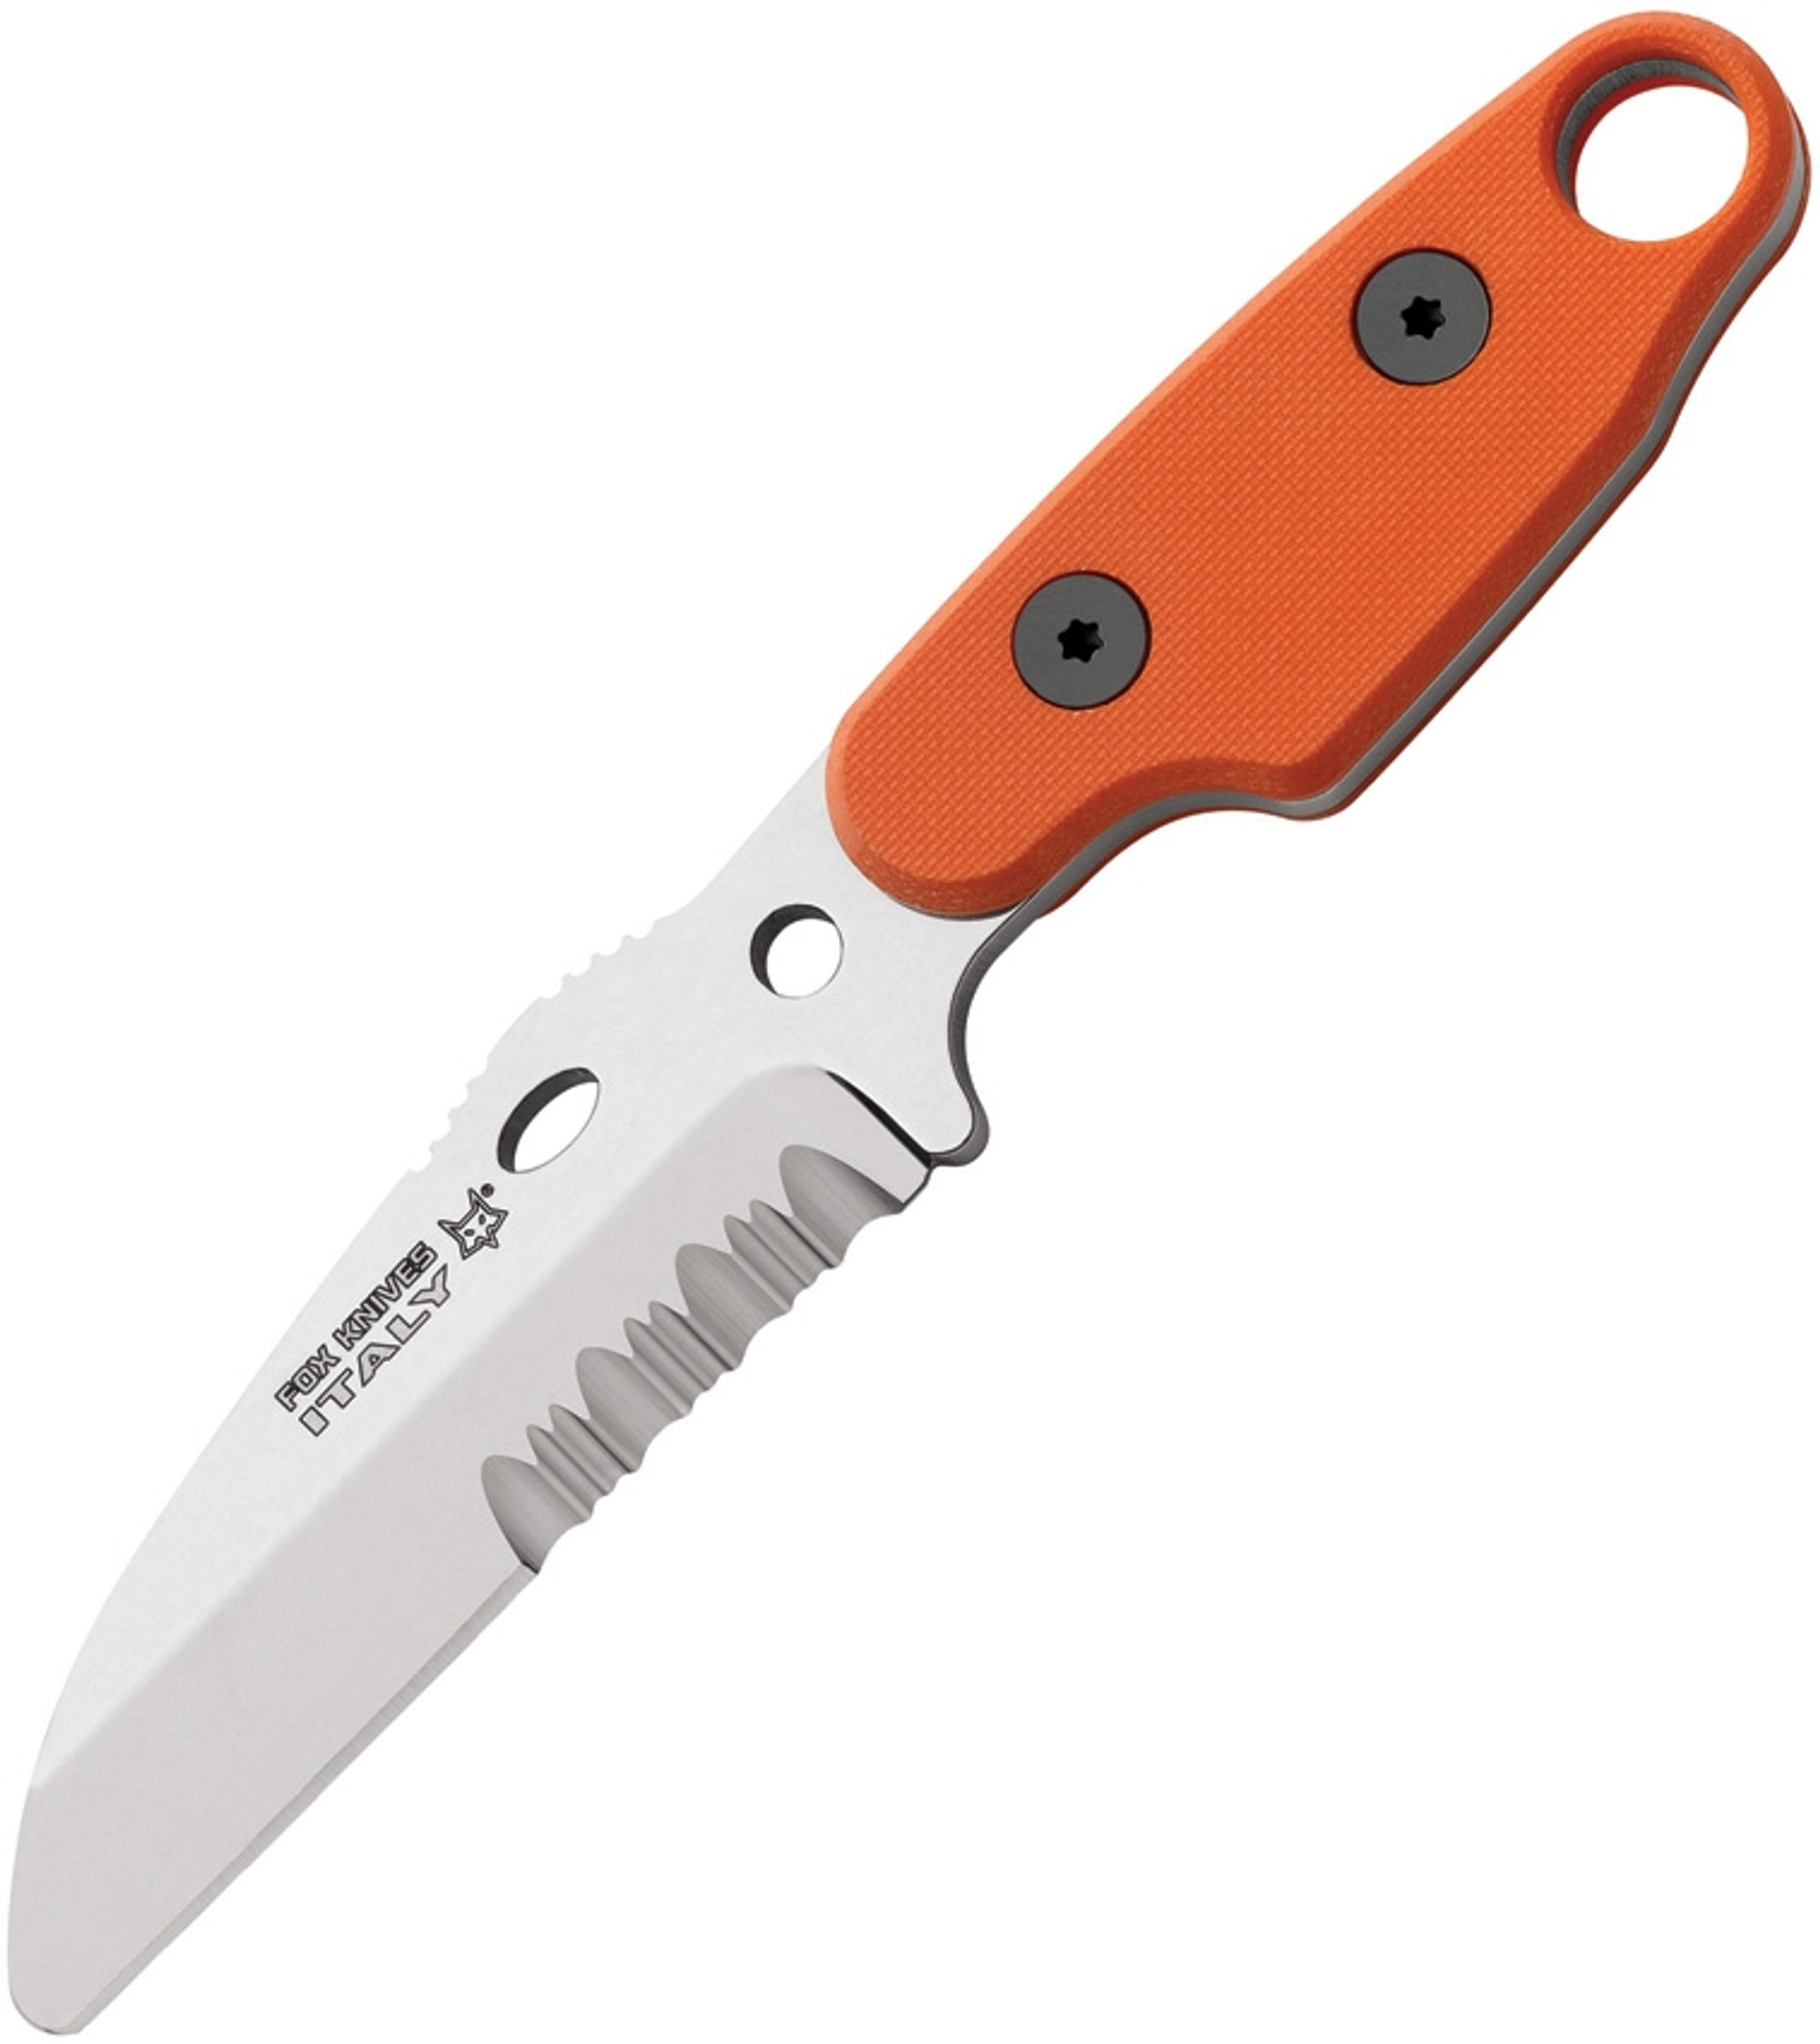 Compso Neck Knife Orange